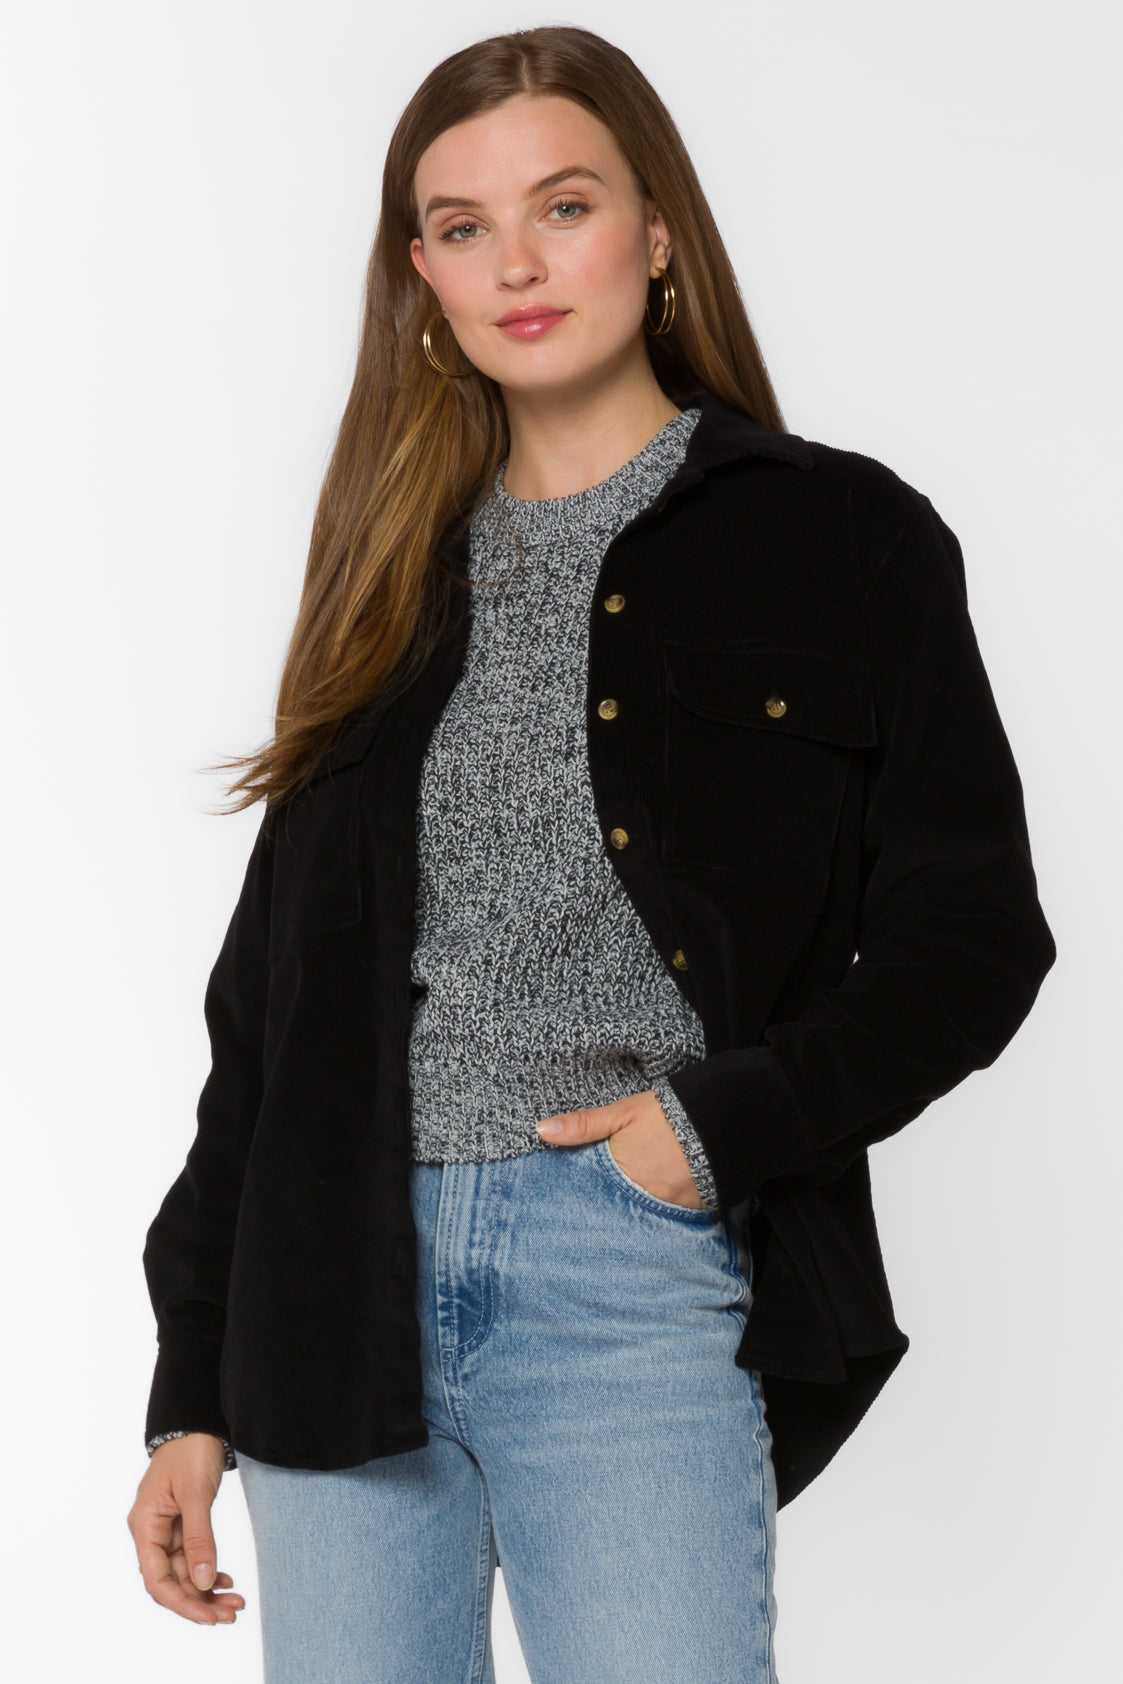 Magnolia Black Shacket - Jackets & Outerwear - Velvet Heart Clothing